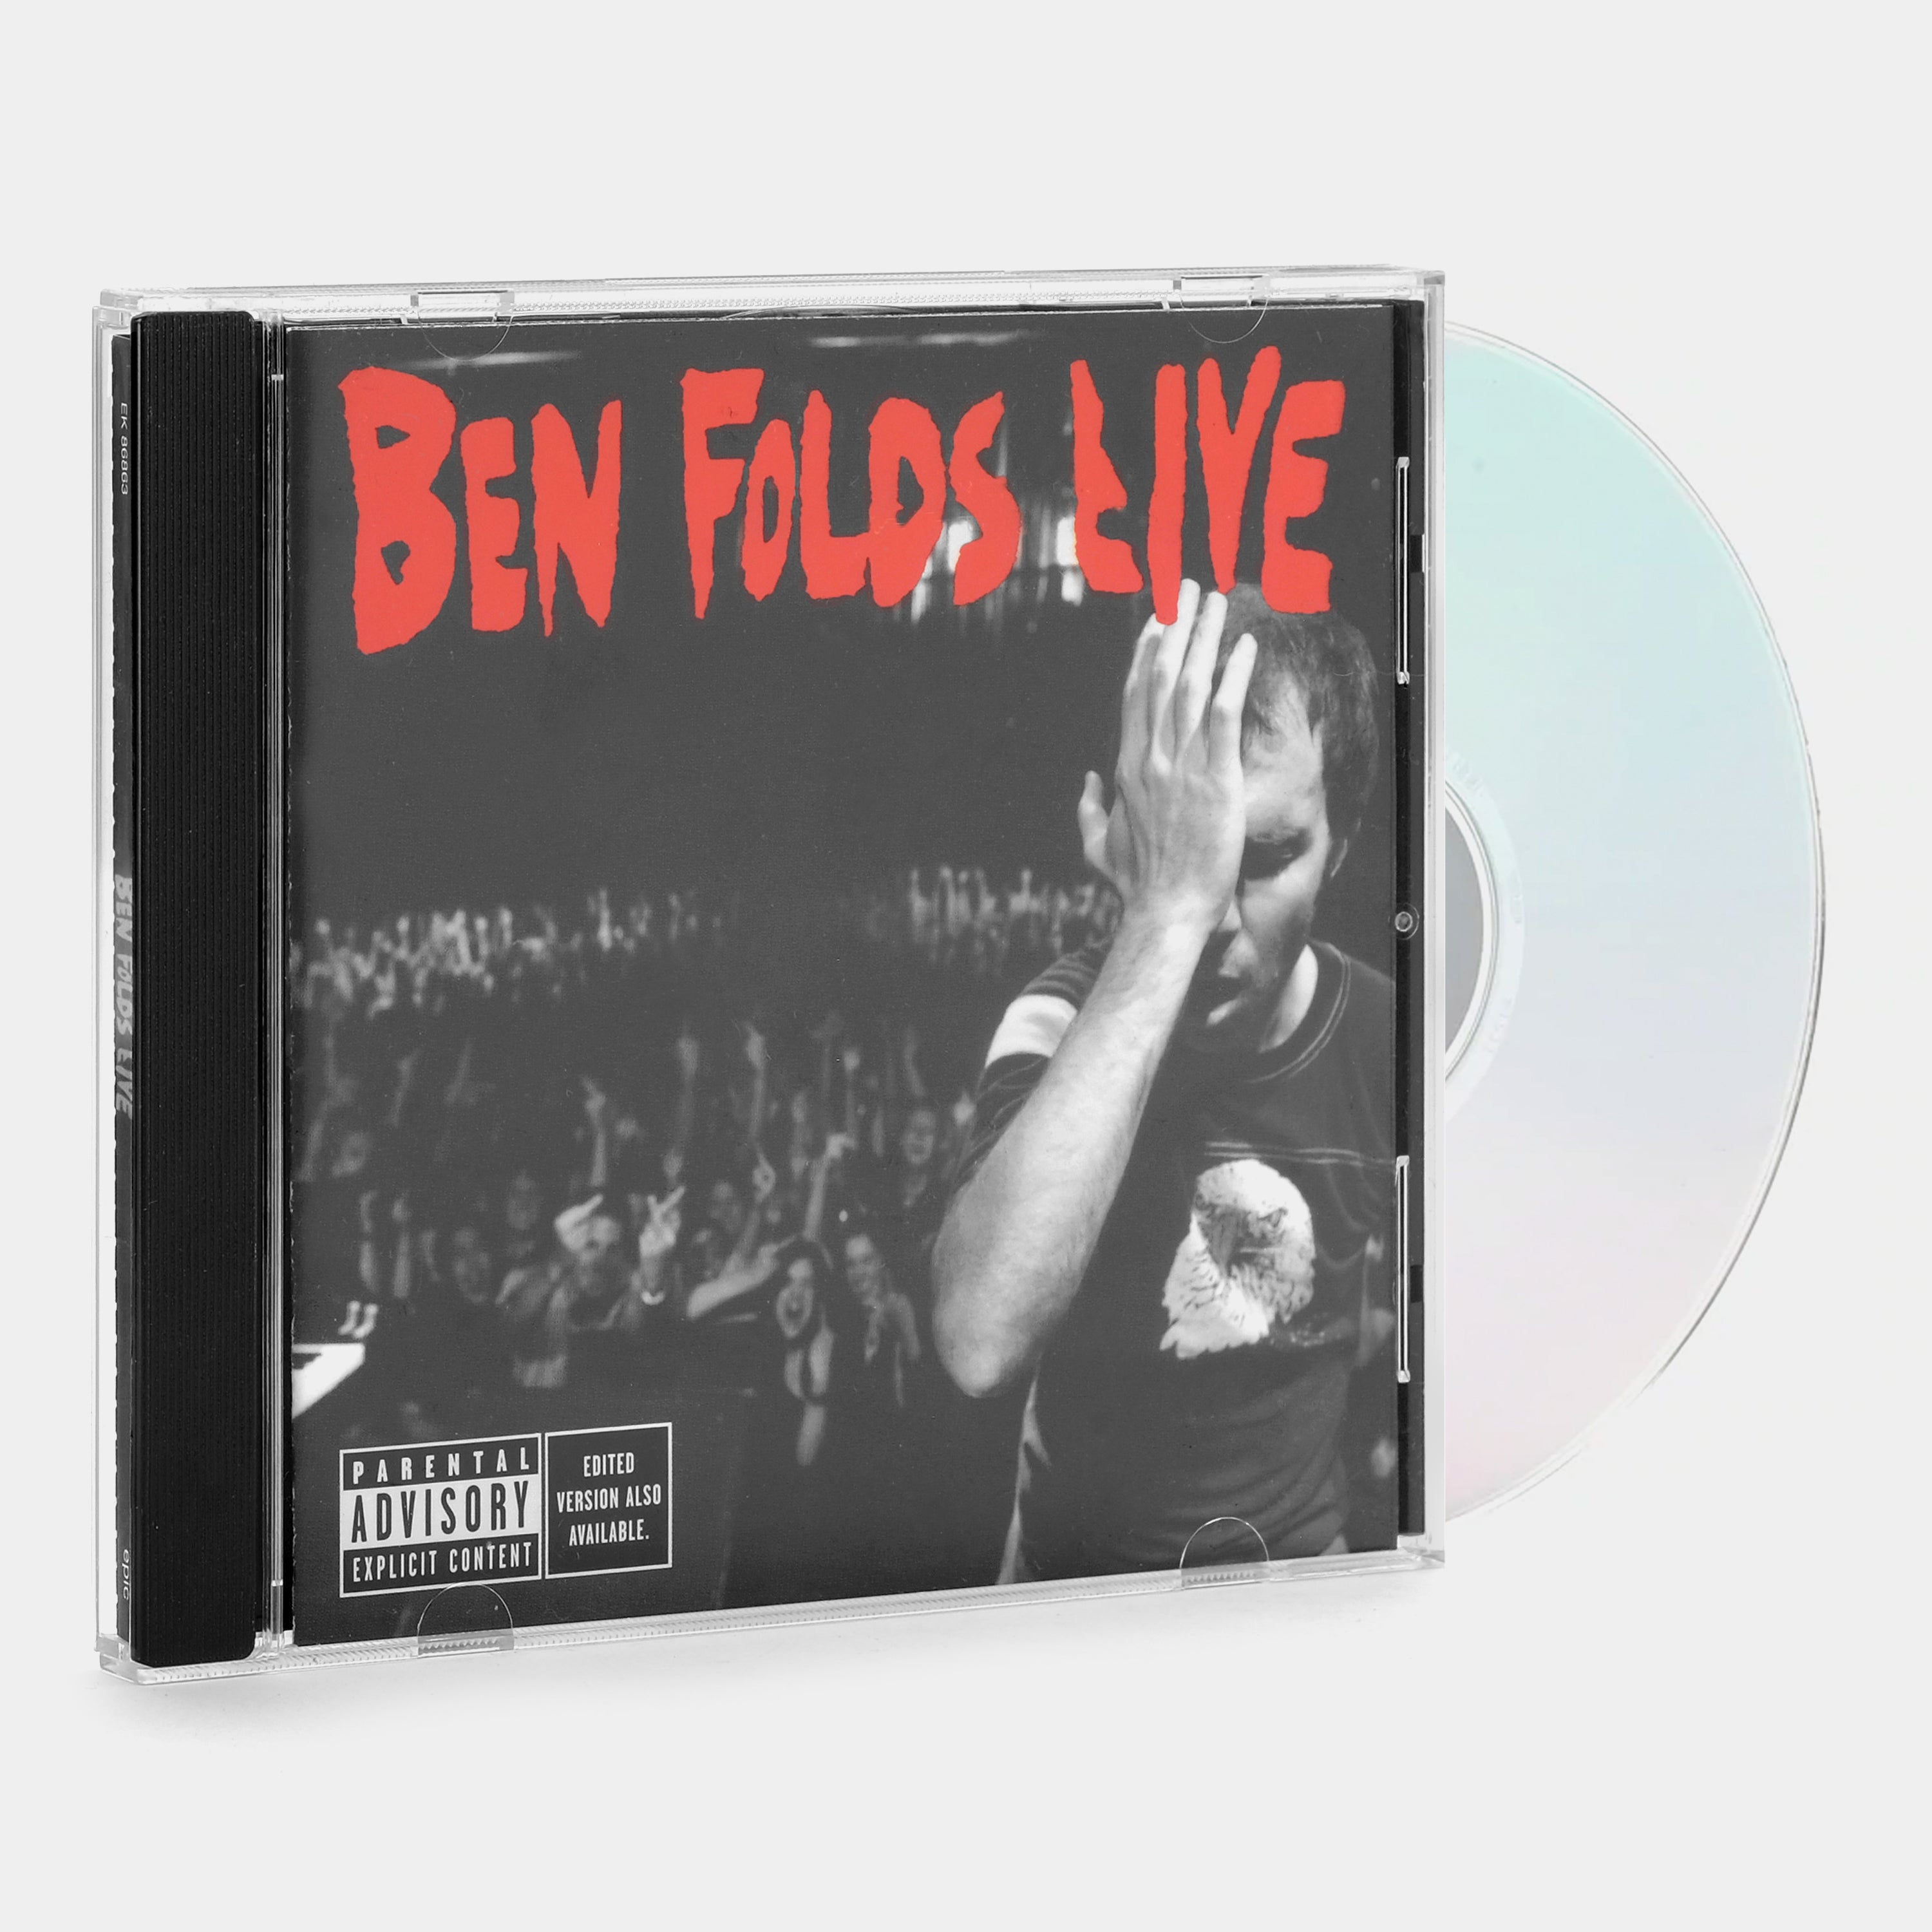 Ben Folds - Ben Folds Live CD